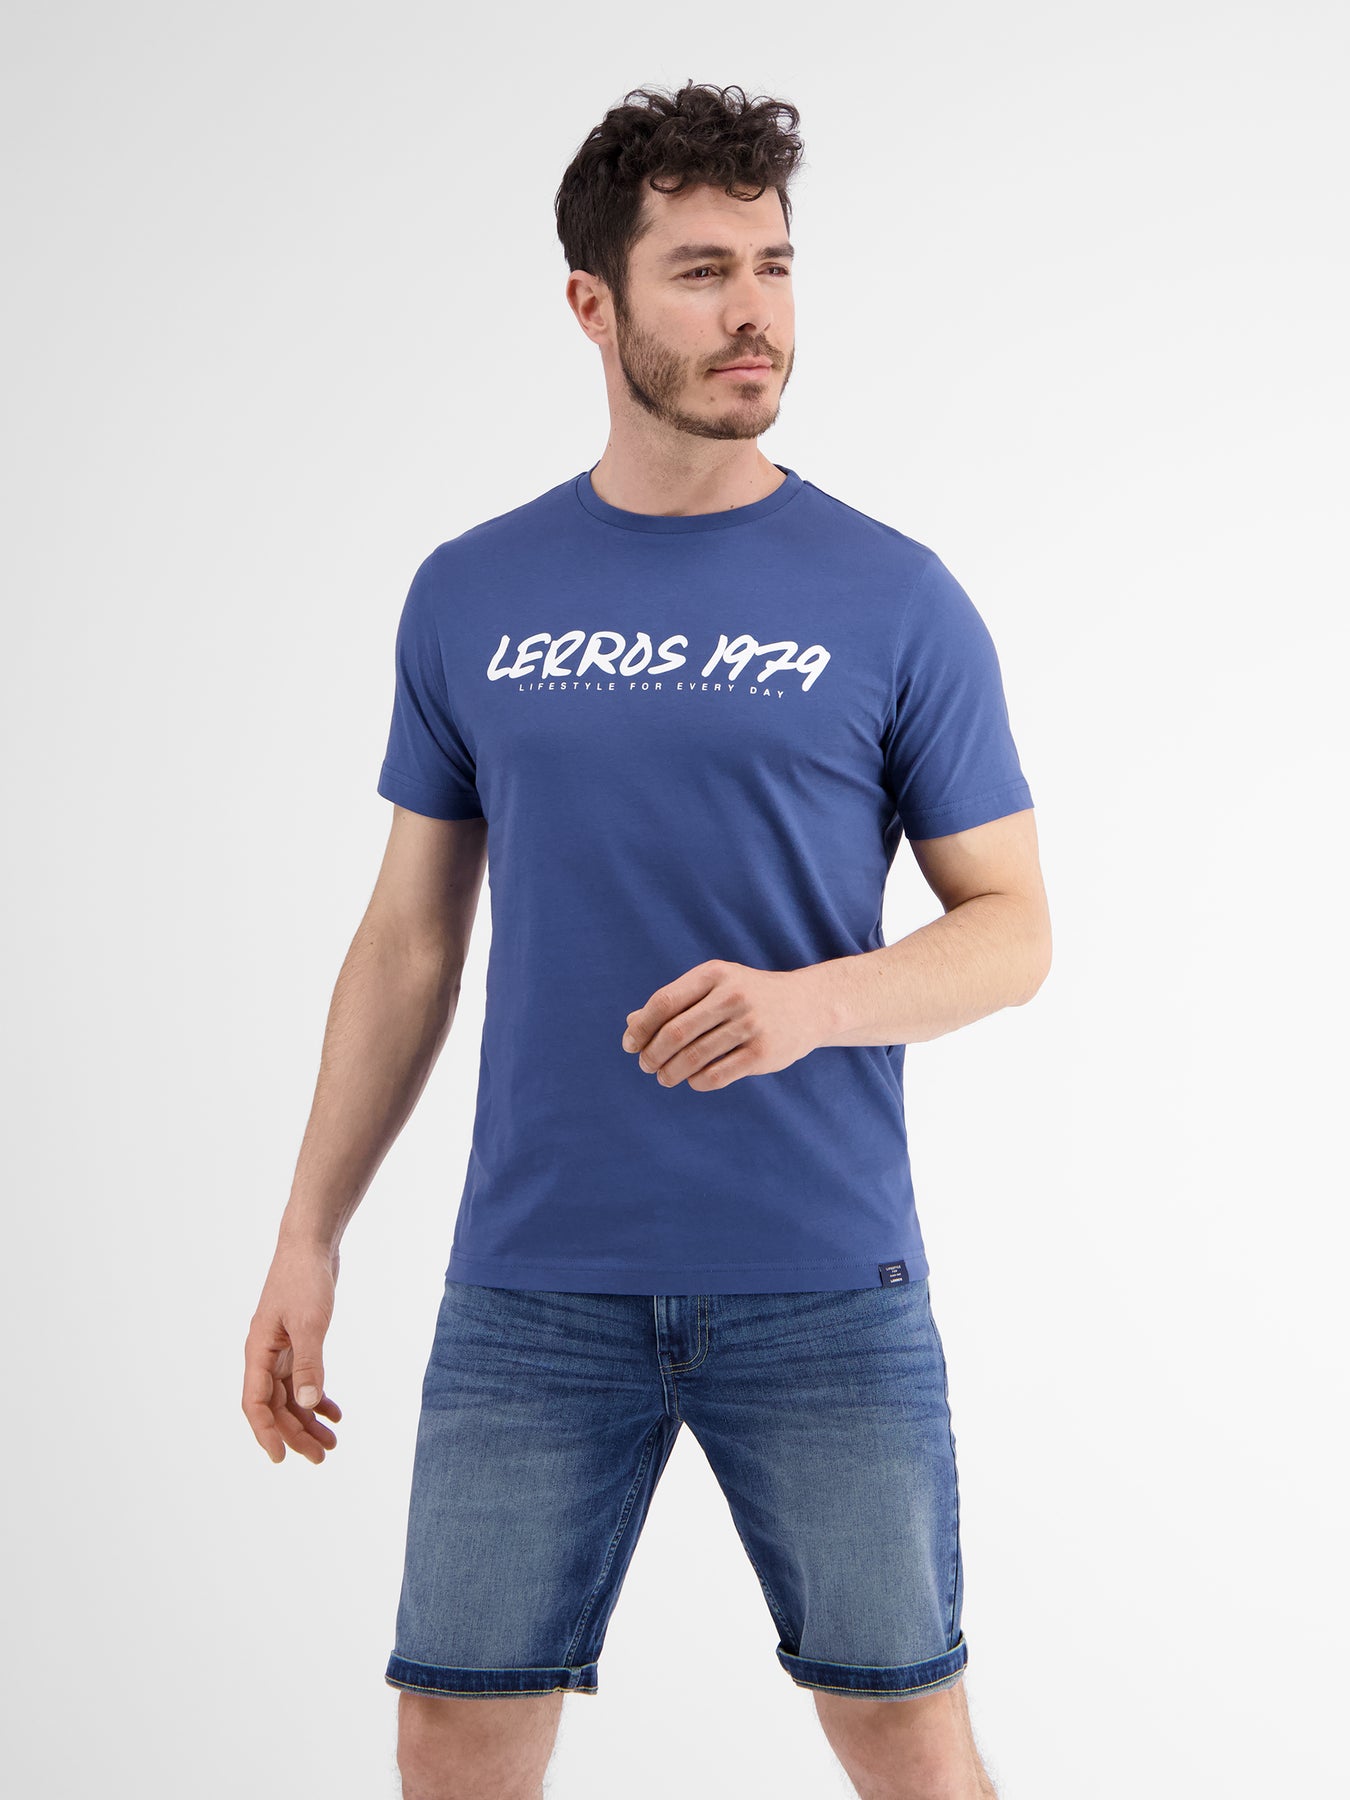 LERROS – SHOP 1979* T-Shirt *LERROS